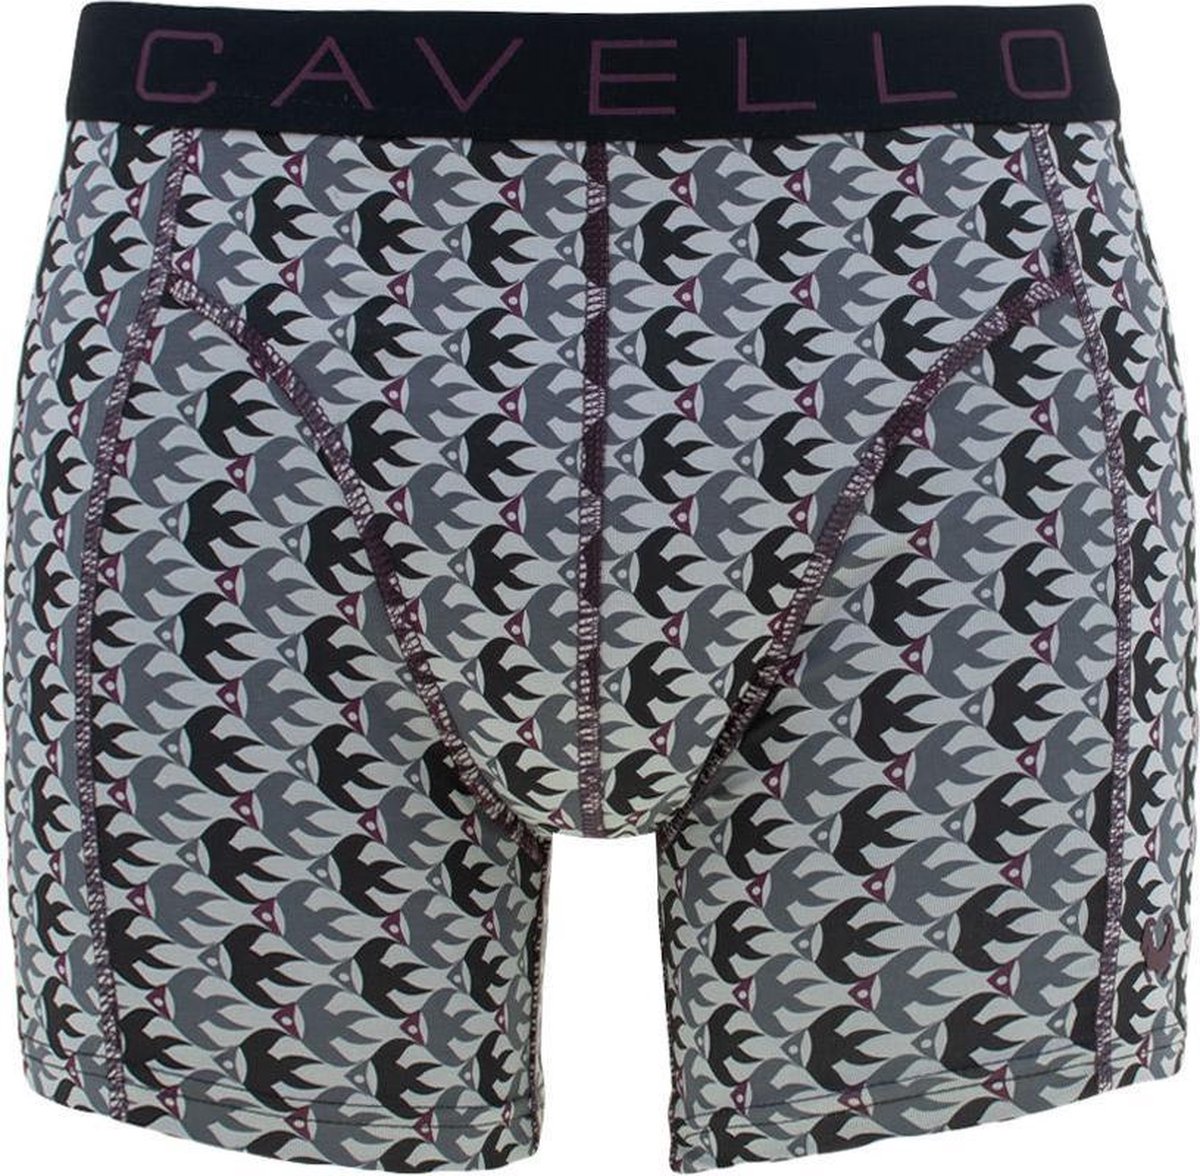 Cavello - Heren - 2-Pack Boxershorts Vissen - Zwart - XL